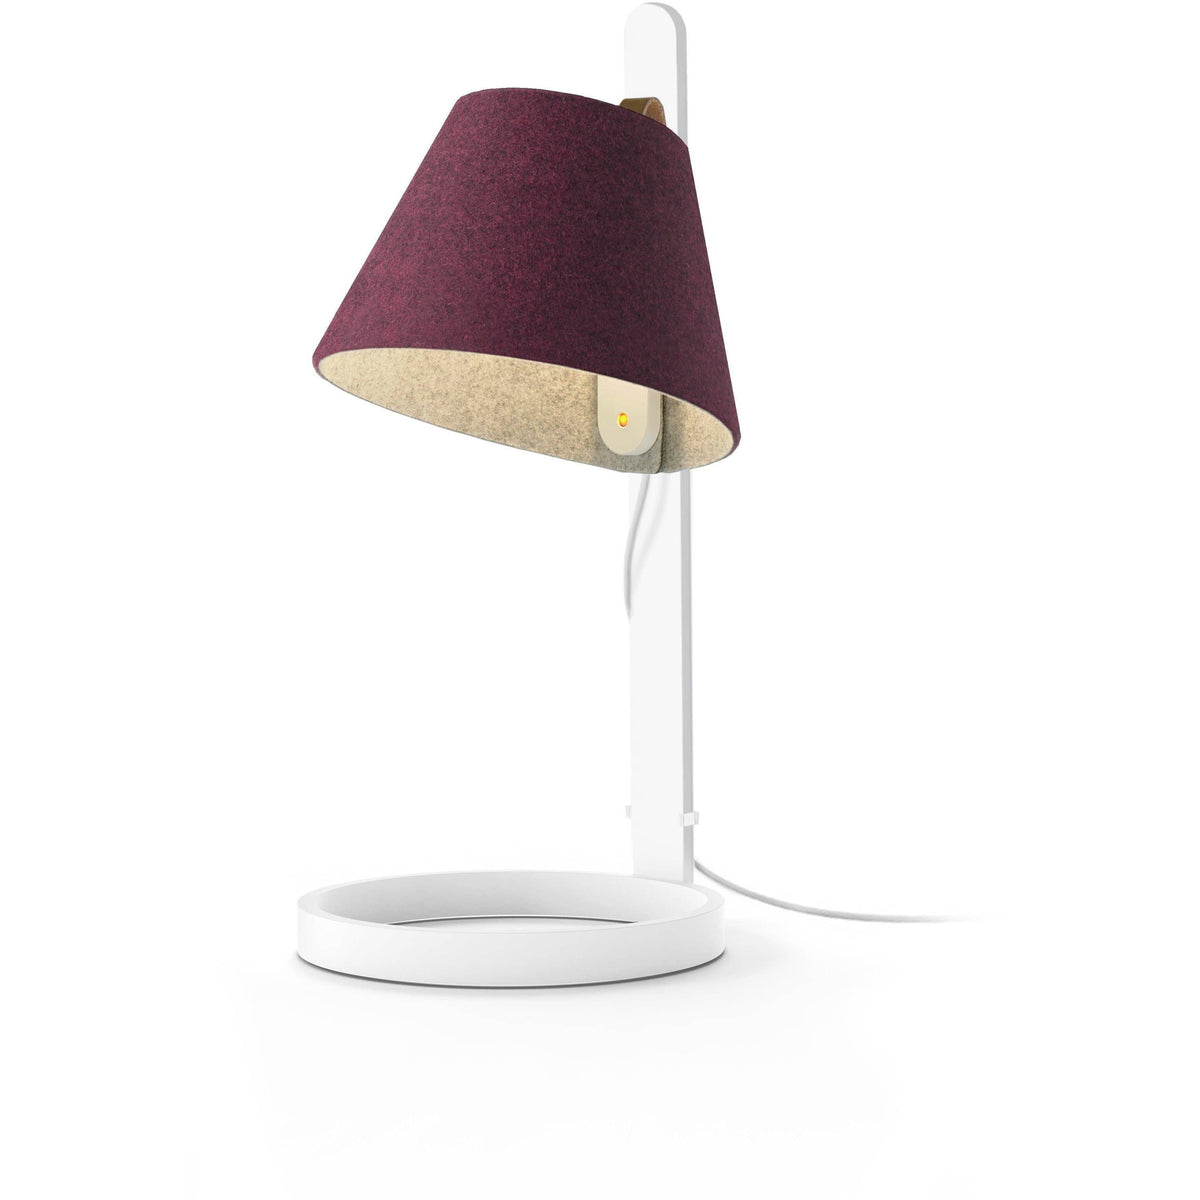 Pablo Designs - Lana Table Lamp - LANA MINI TBL PLUM/GRY WHT | Montreal Lighting & Hardware